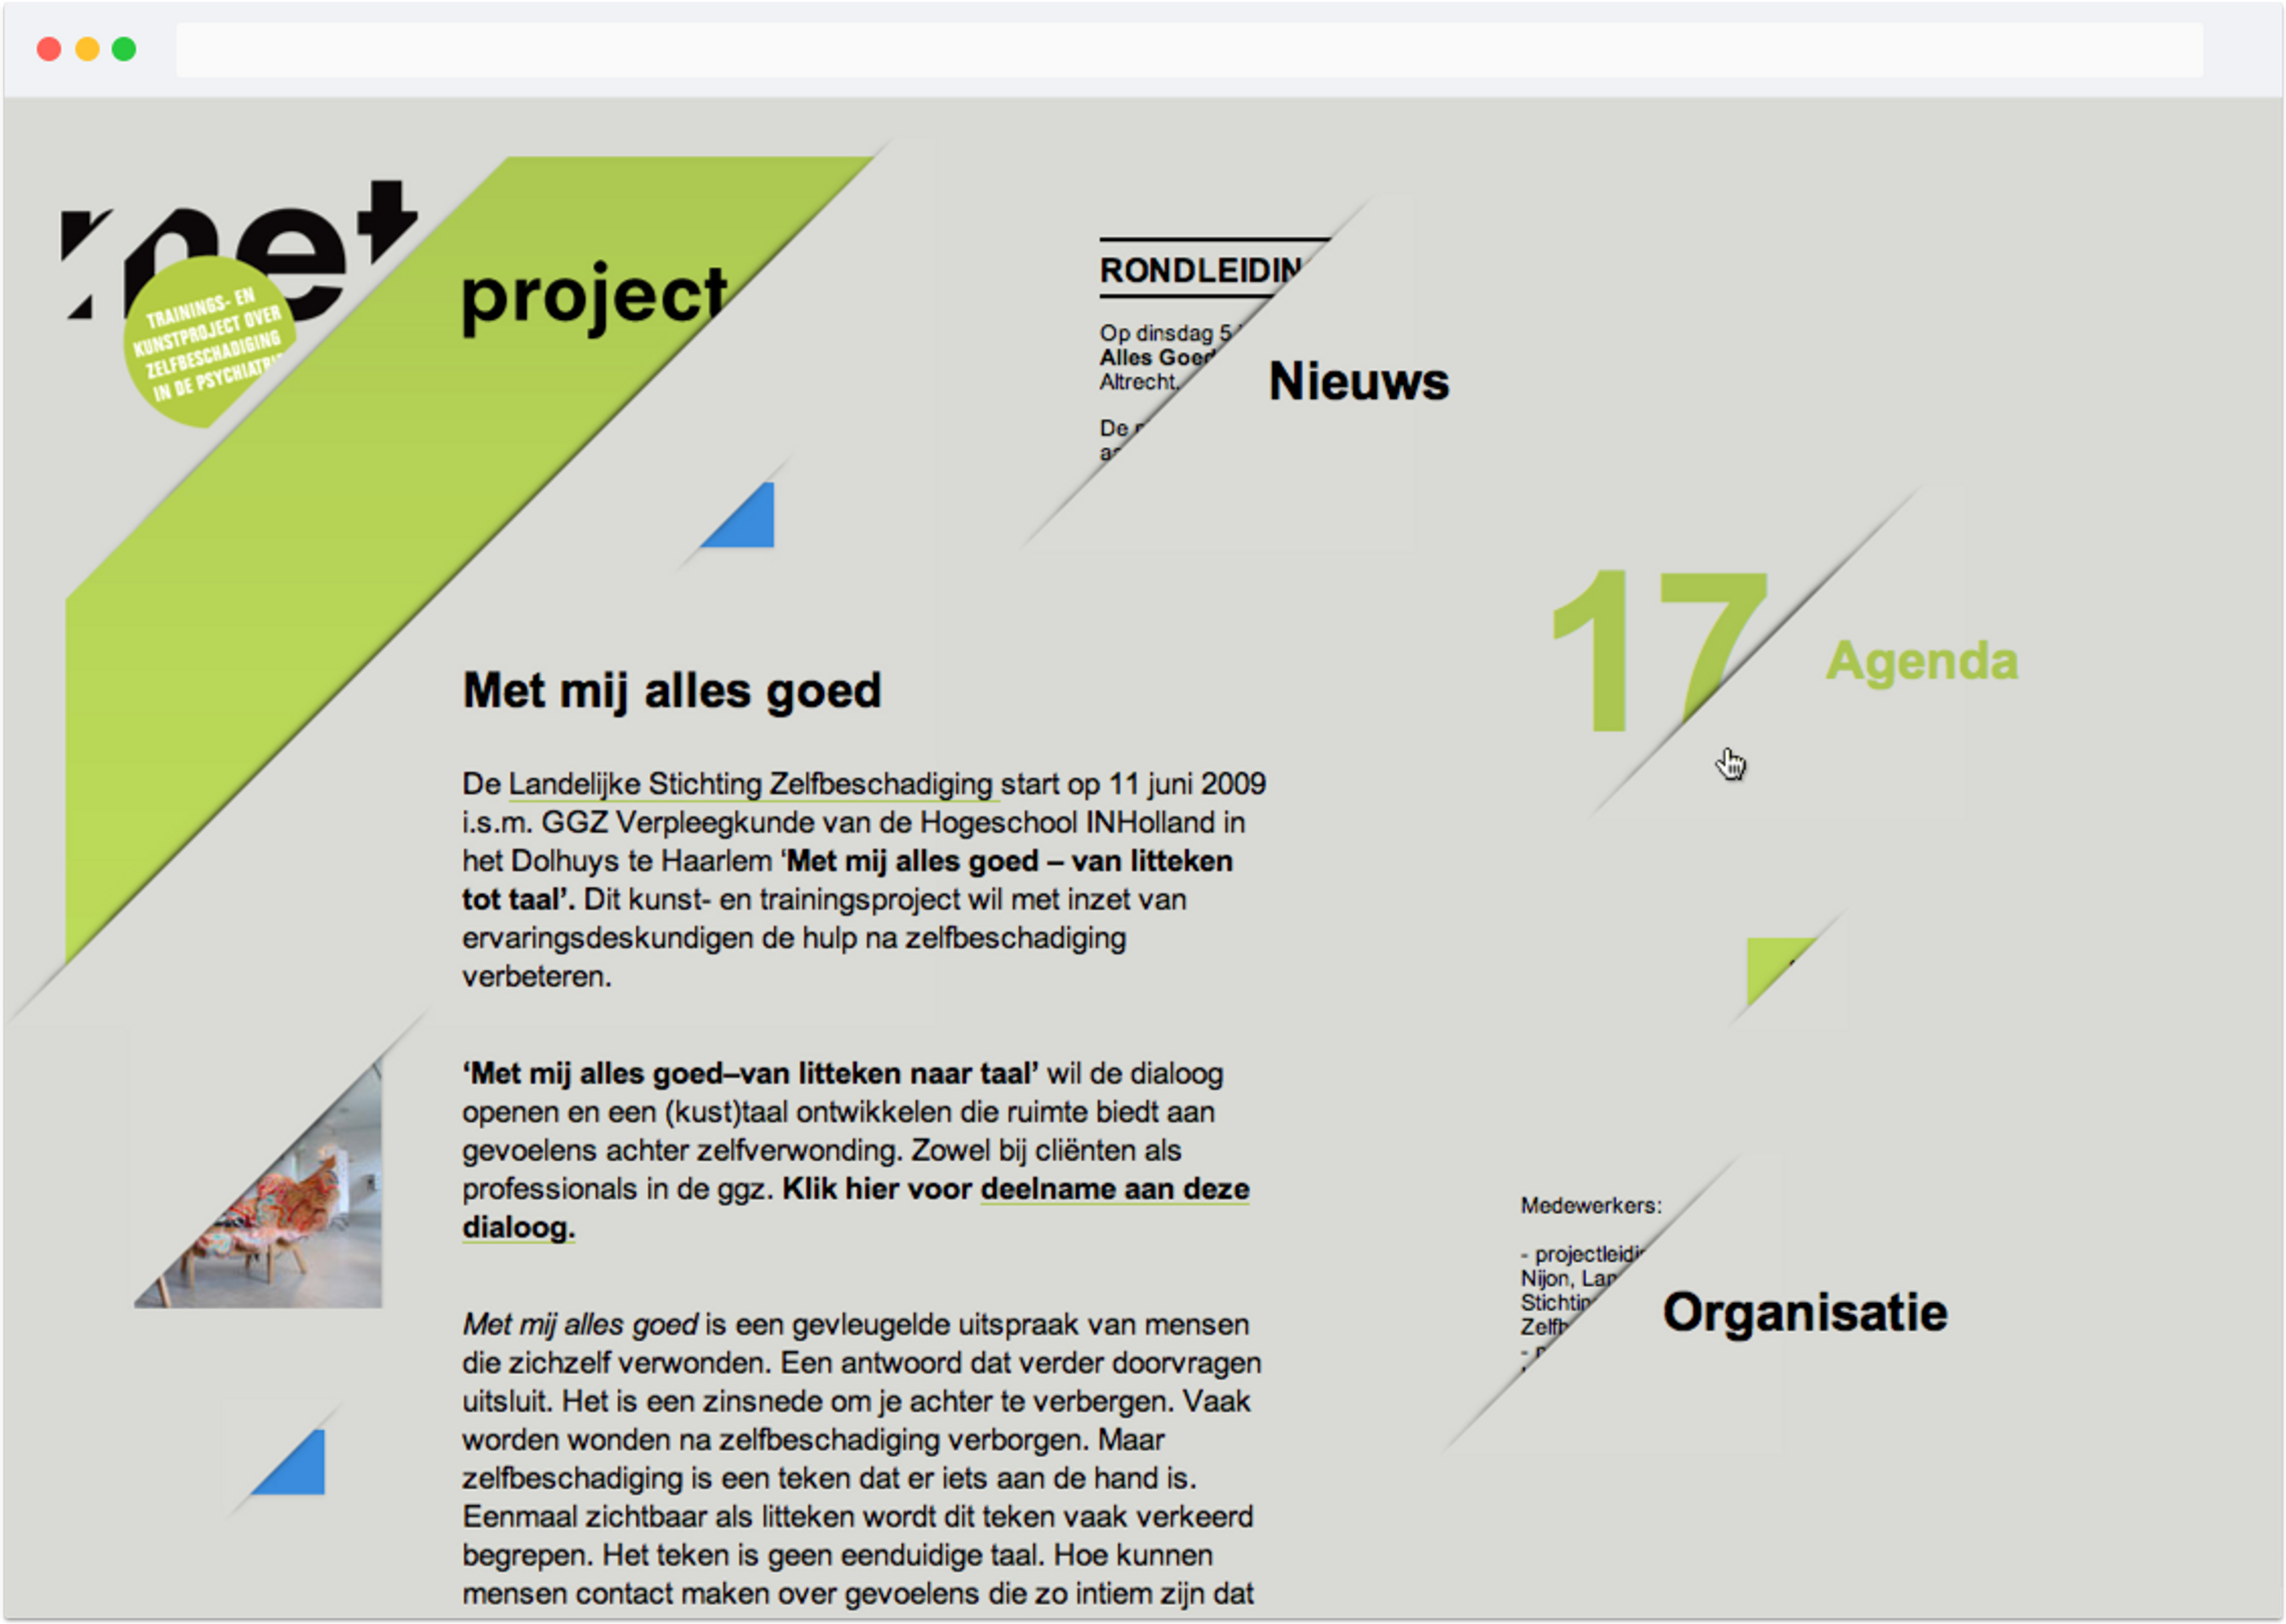 Design and development for “Met mij alles goed” website in collaboration with René Put.